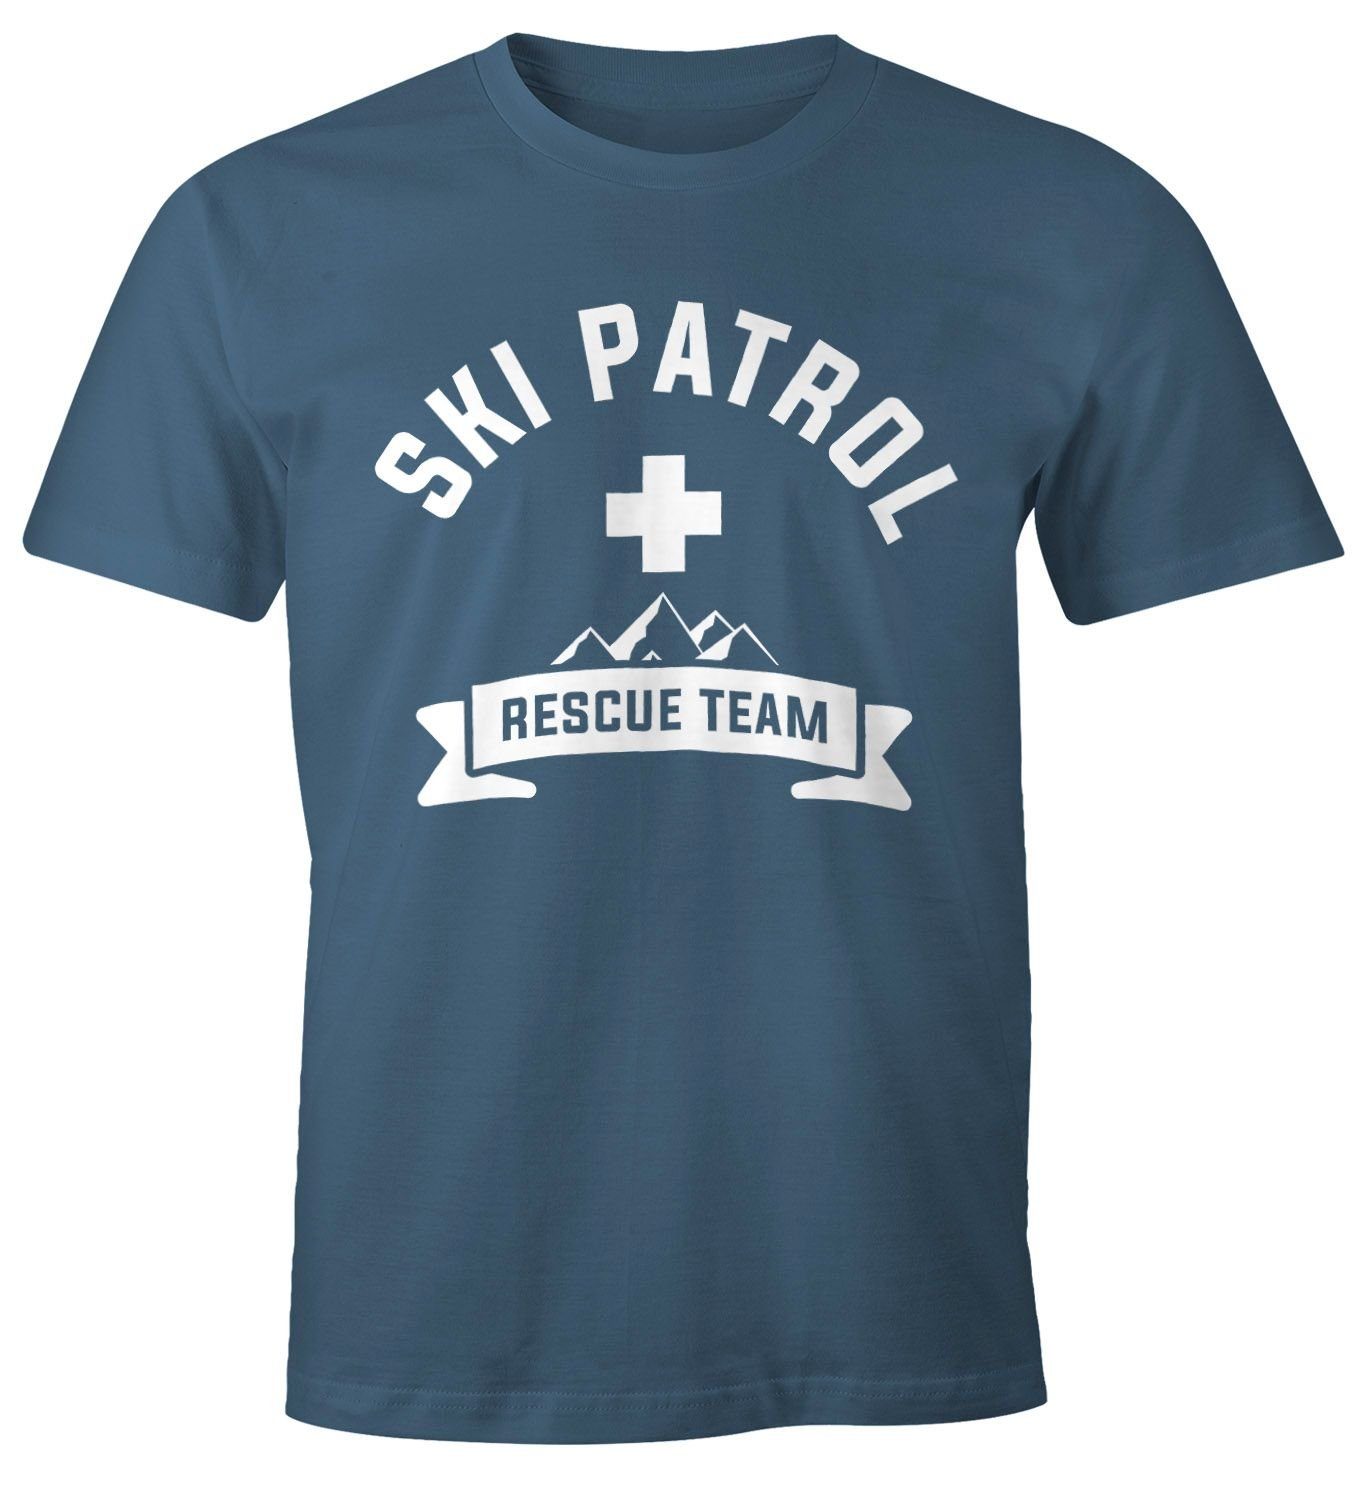 Print-Shirt T-Shirt Fun-Shirt Apres-Ski mit Moonworks® Rescue MoonWorks blau Team Herren Patrol Print